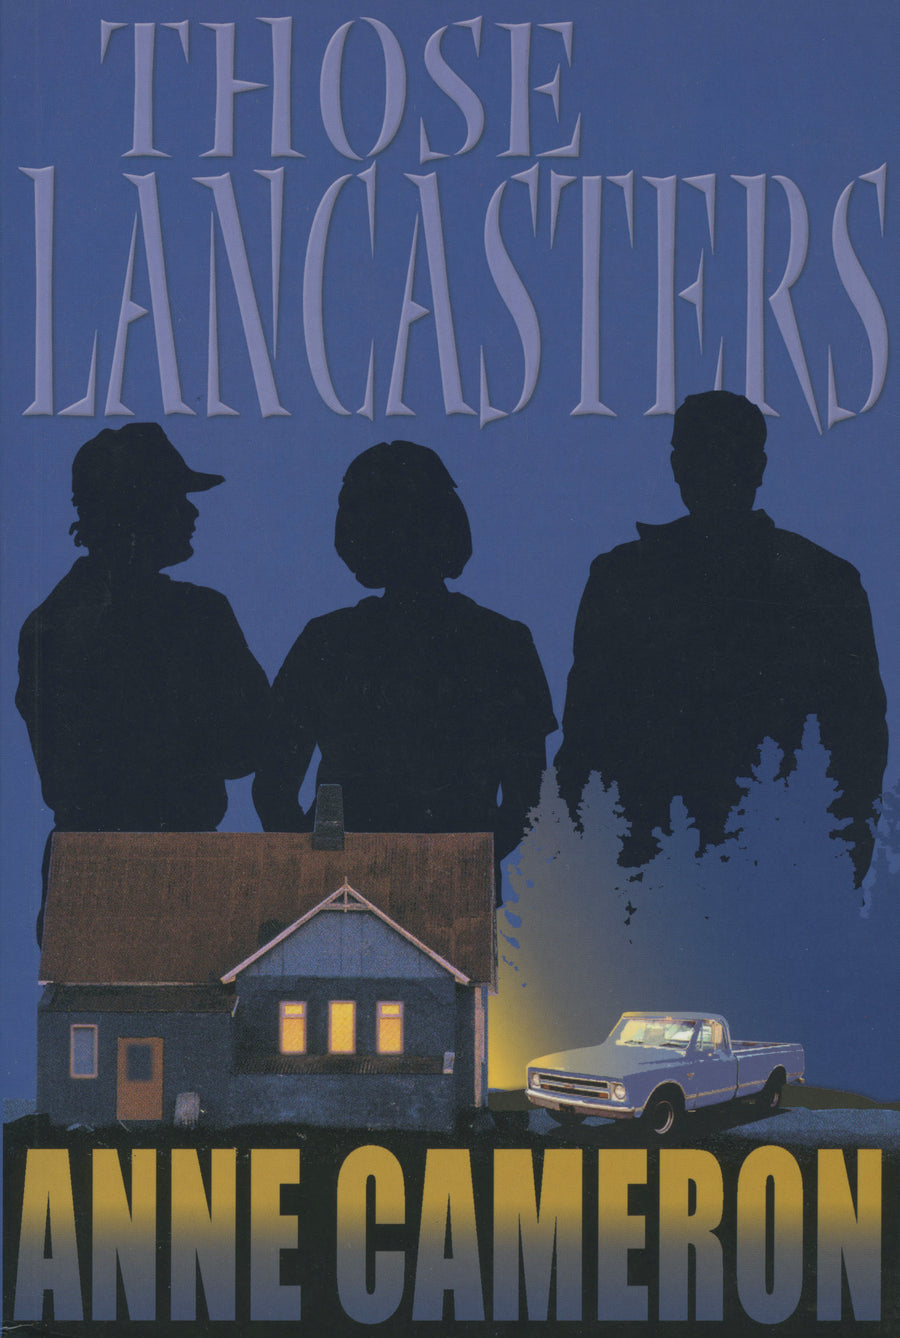 Those Lancasters